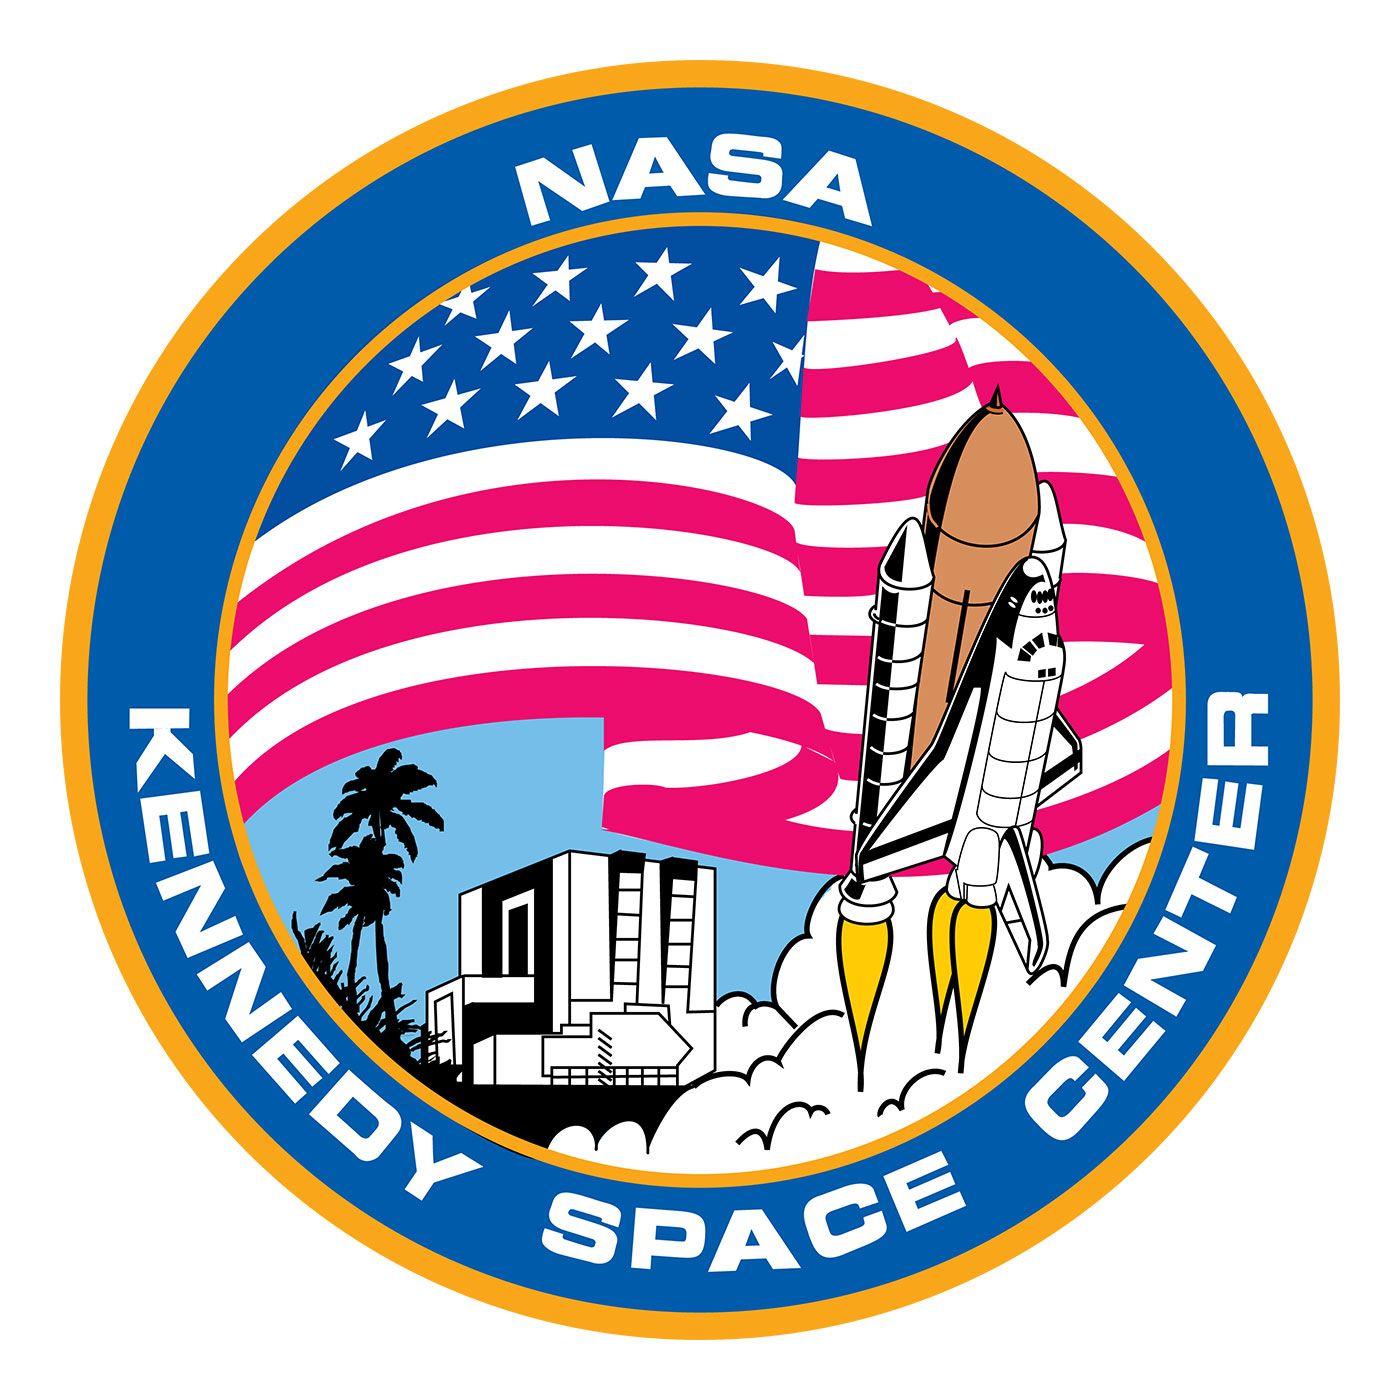 International NASA Logo - NASA's Kennedy Space Center logo (Go): Messages